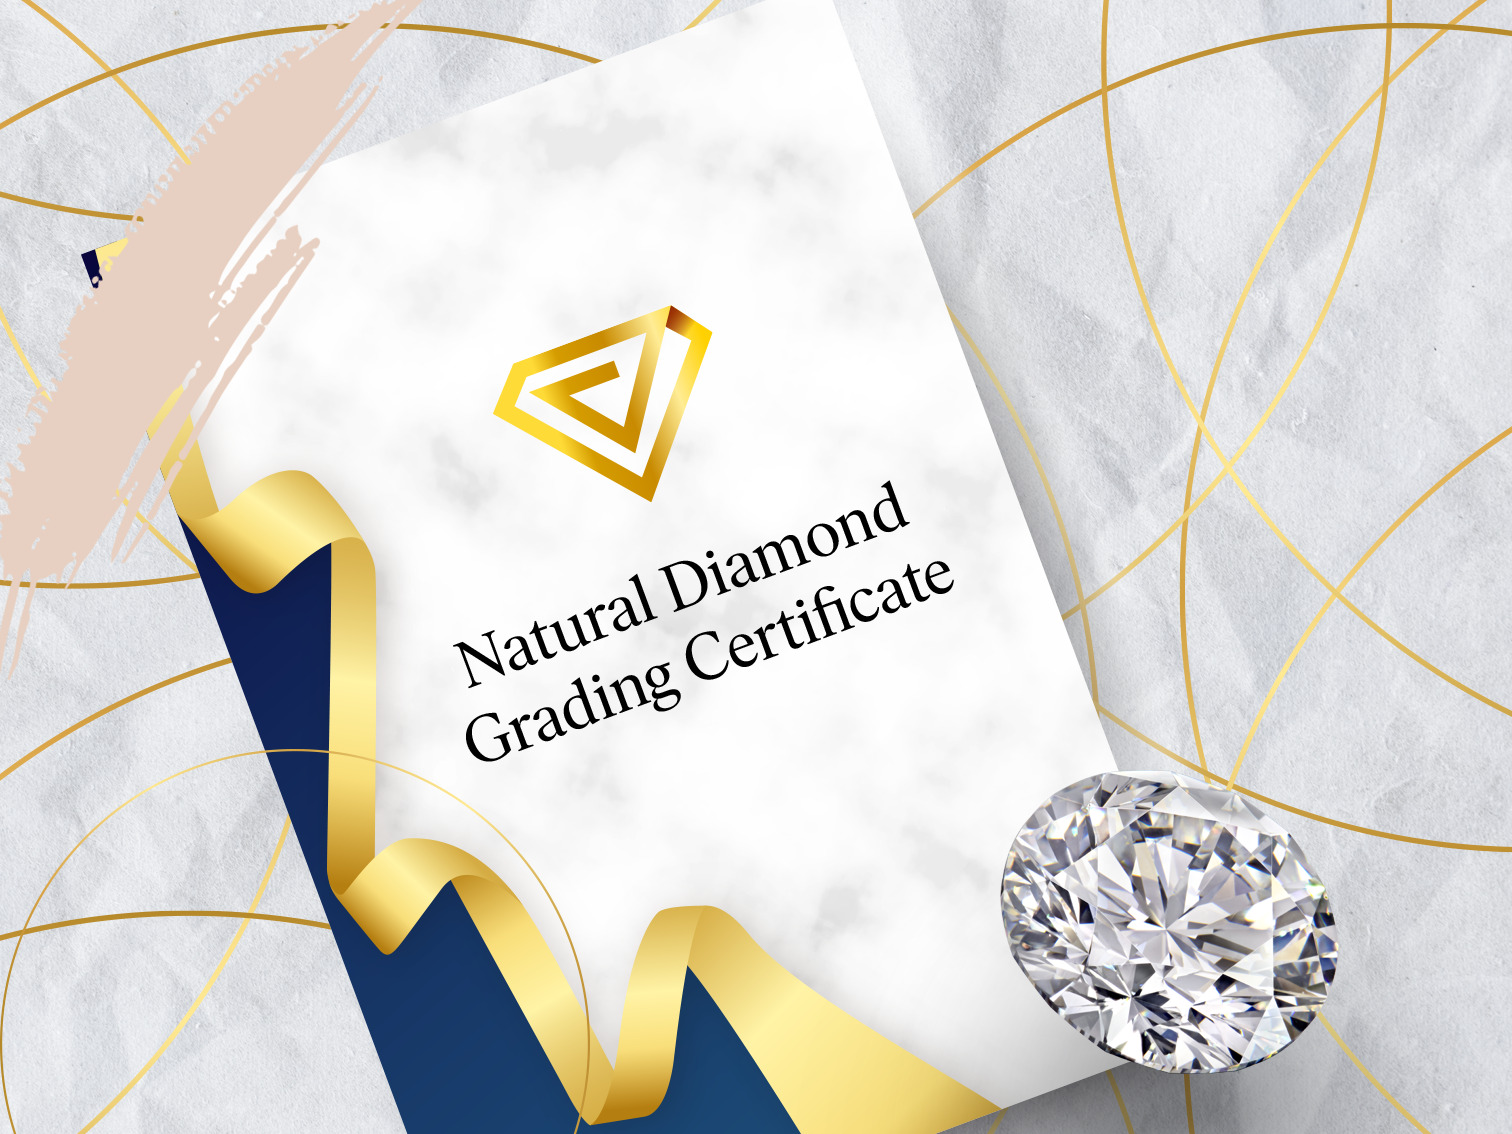 Natural Diamond Grading certificate